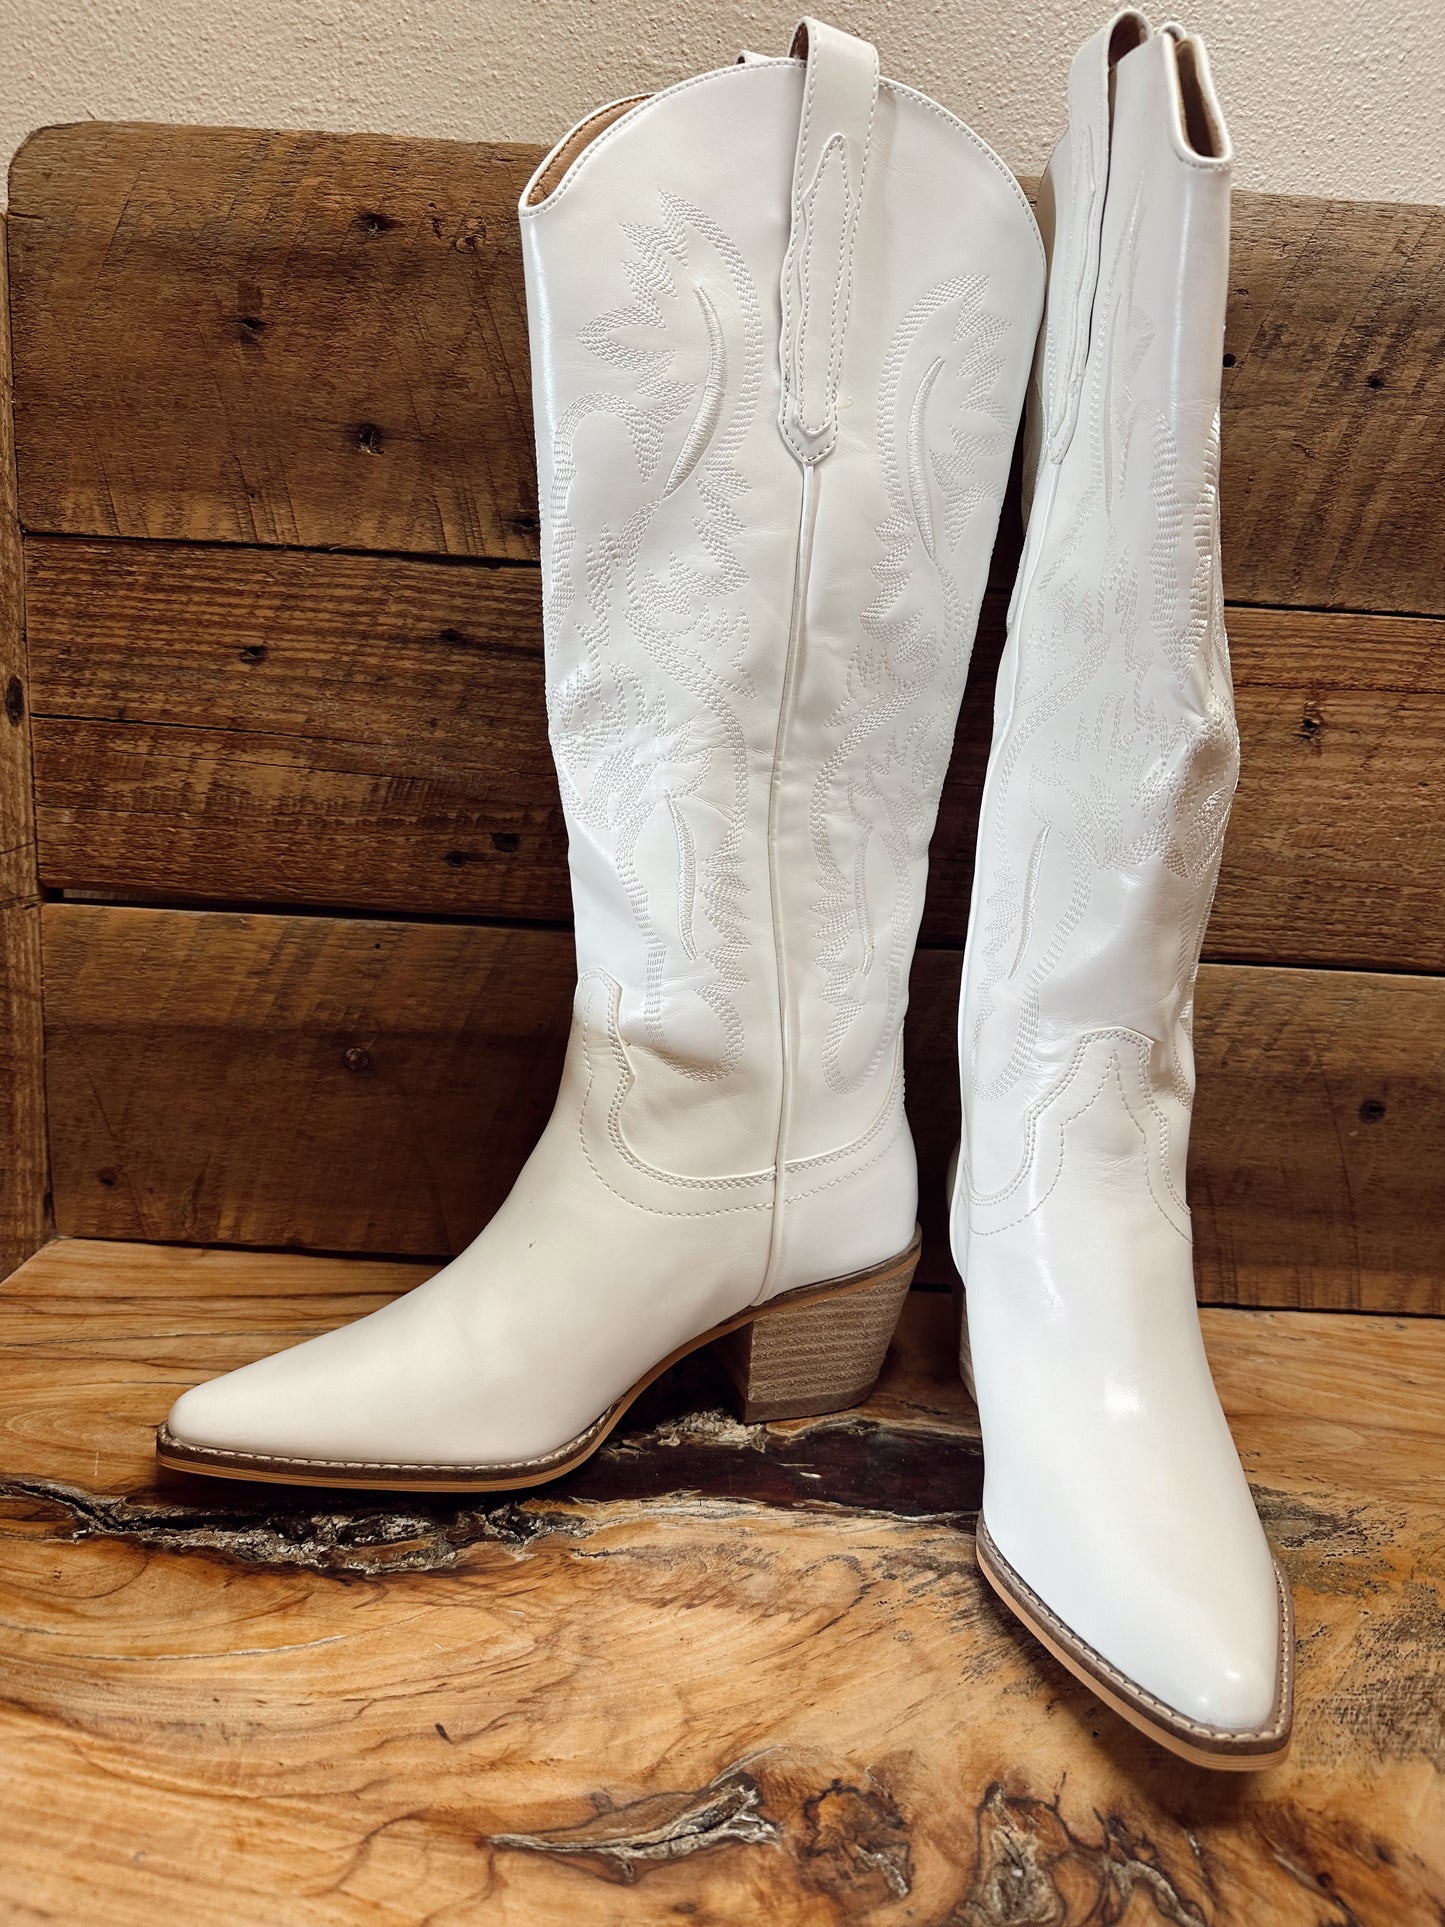 Dixie boots- white